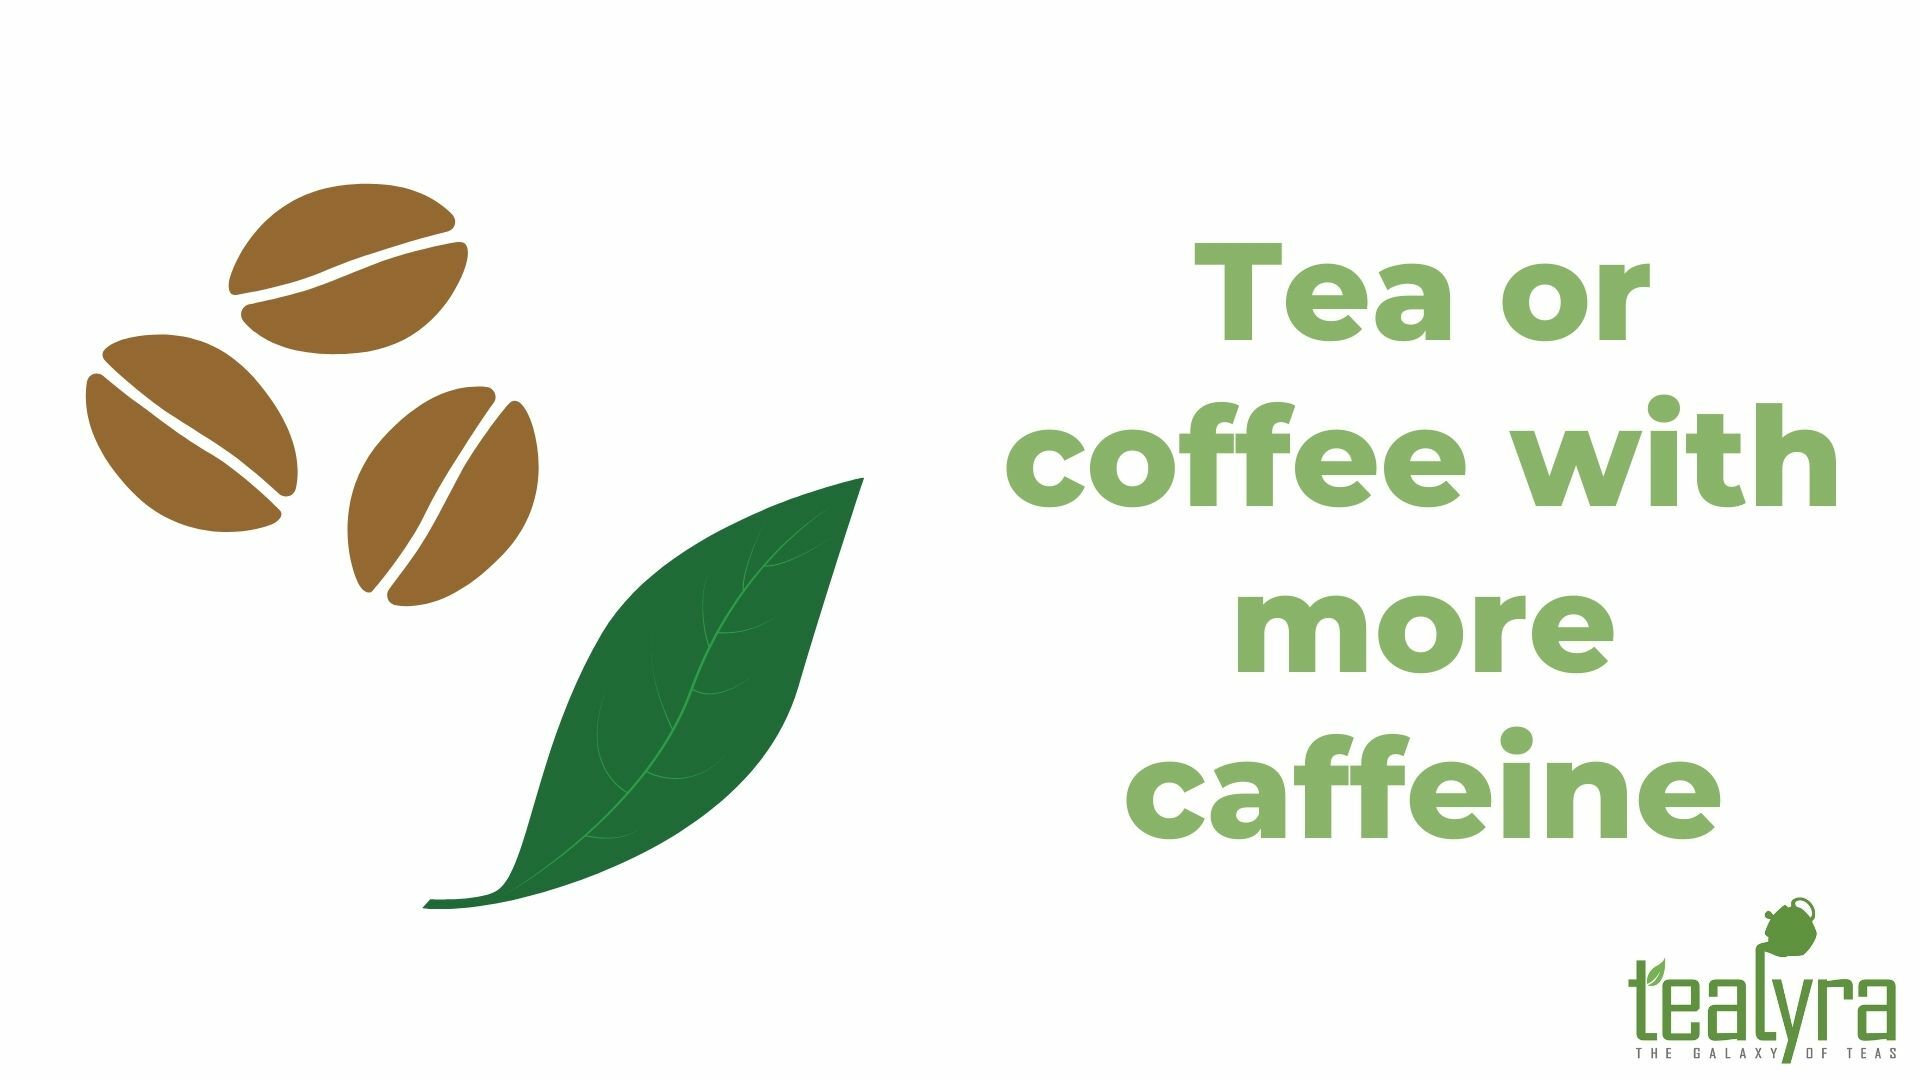 Tea-or-coffee-with-more-caffeine